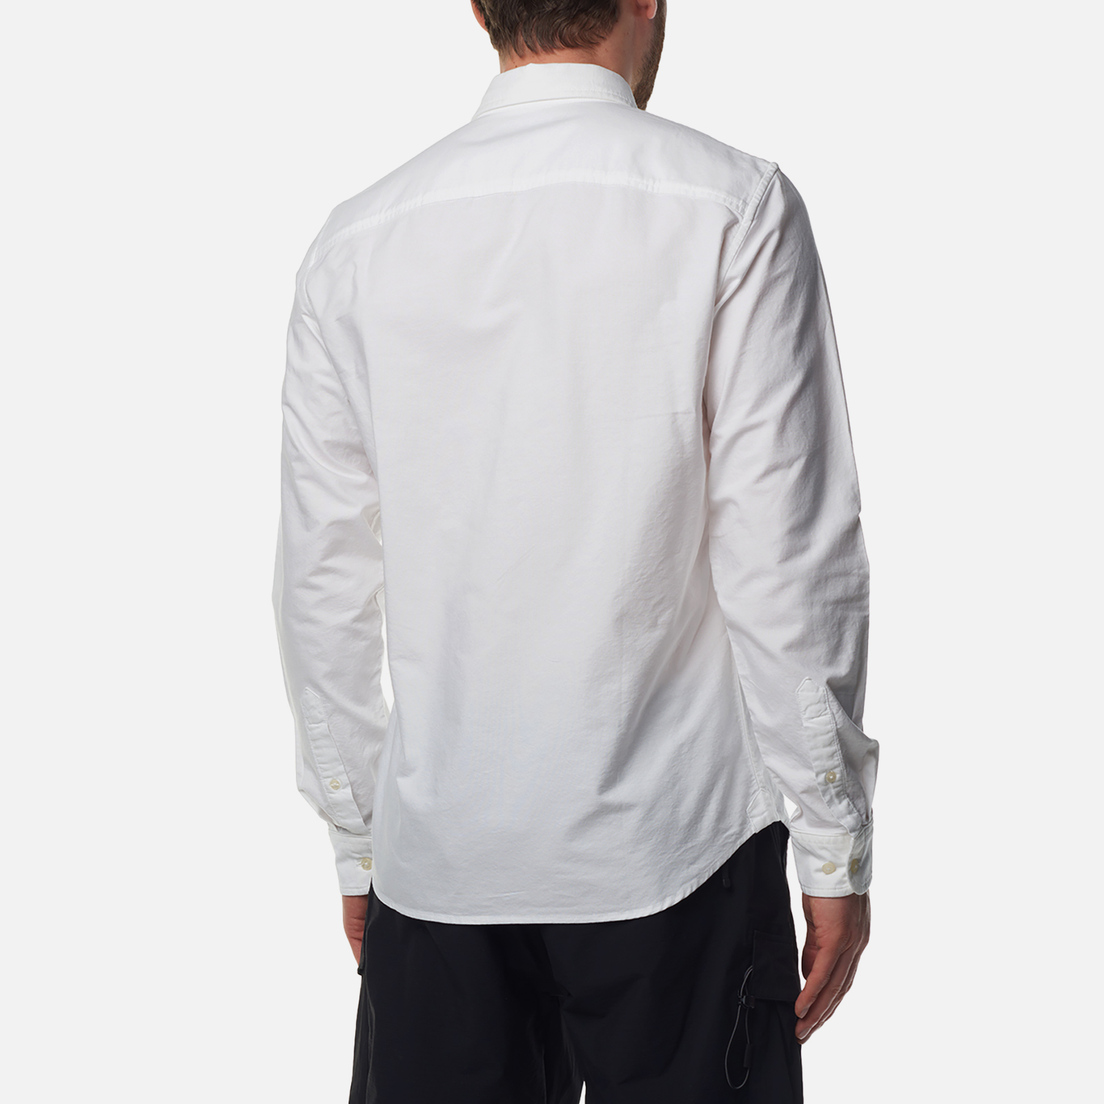 Timberland Мужская рубашка Oxford Slim